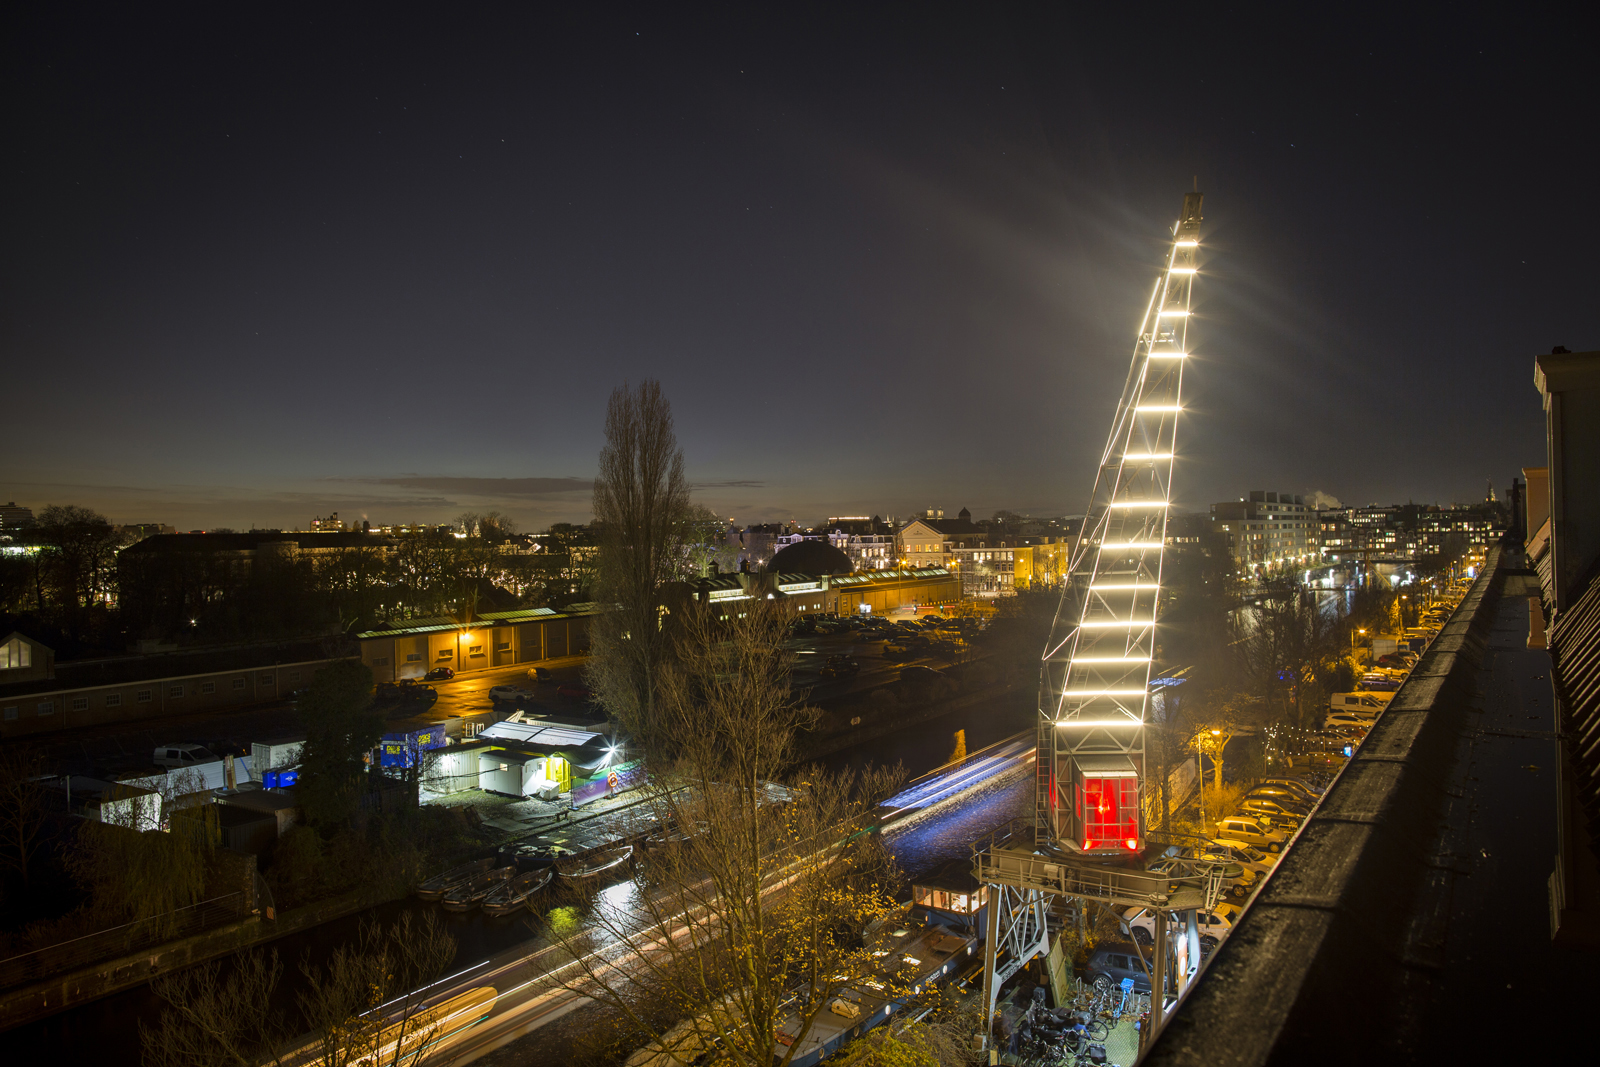 Between the lines by Har Hollands - Amsterdam Light Festival 2019 - Photo Copyright Janus van den Eijnden (10)